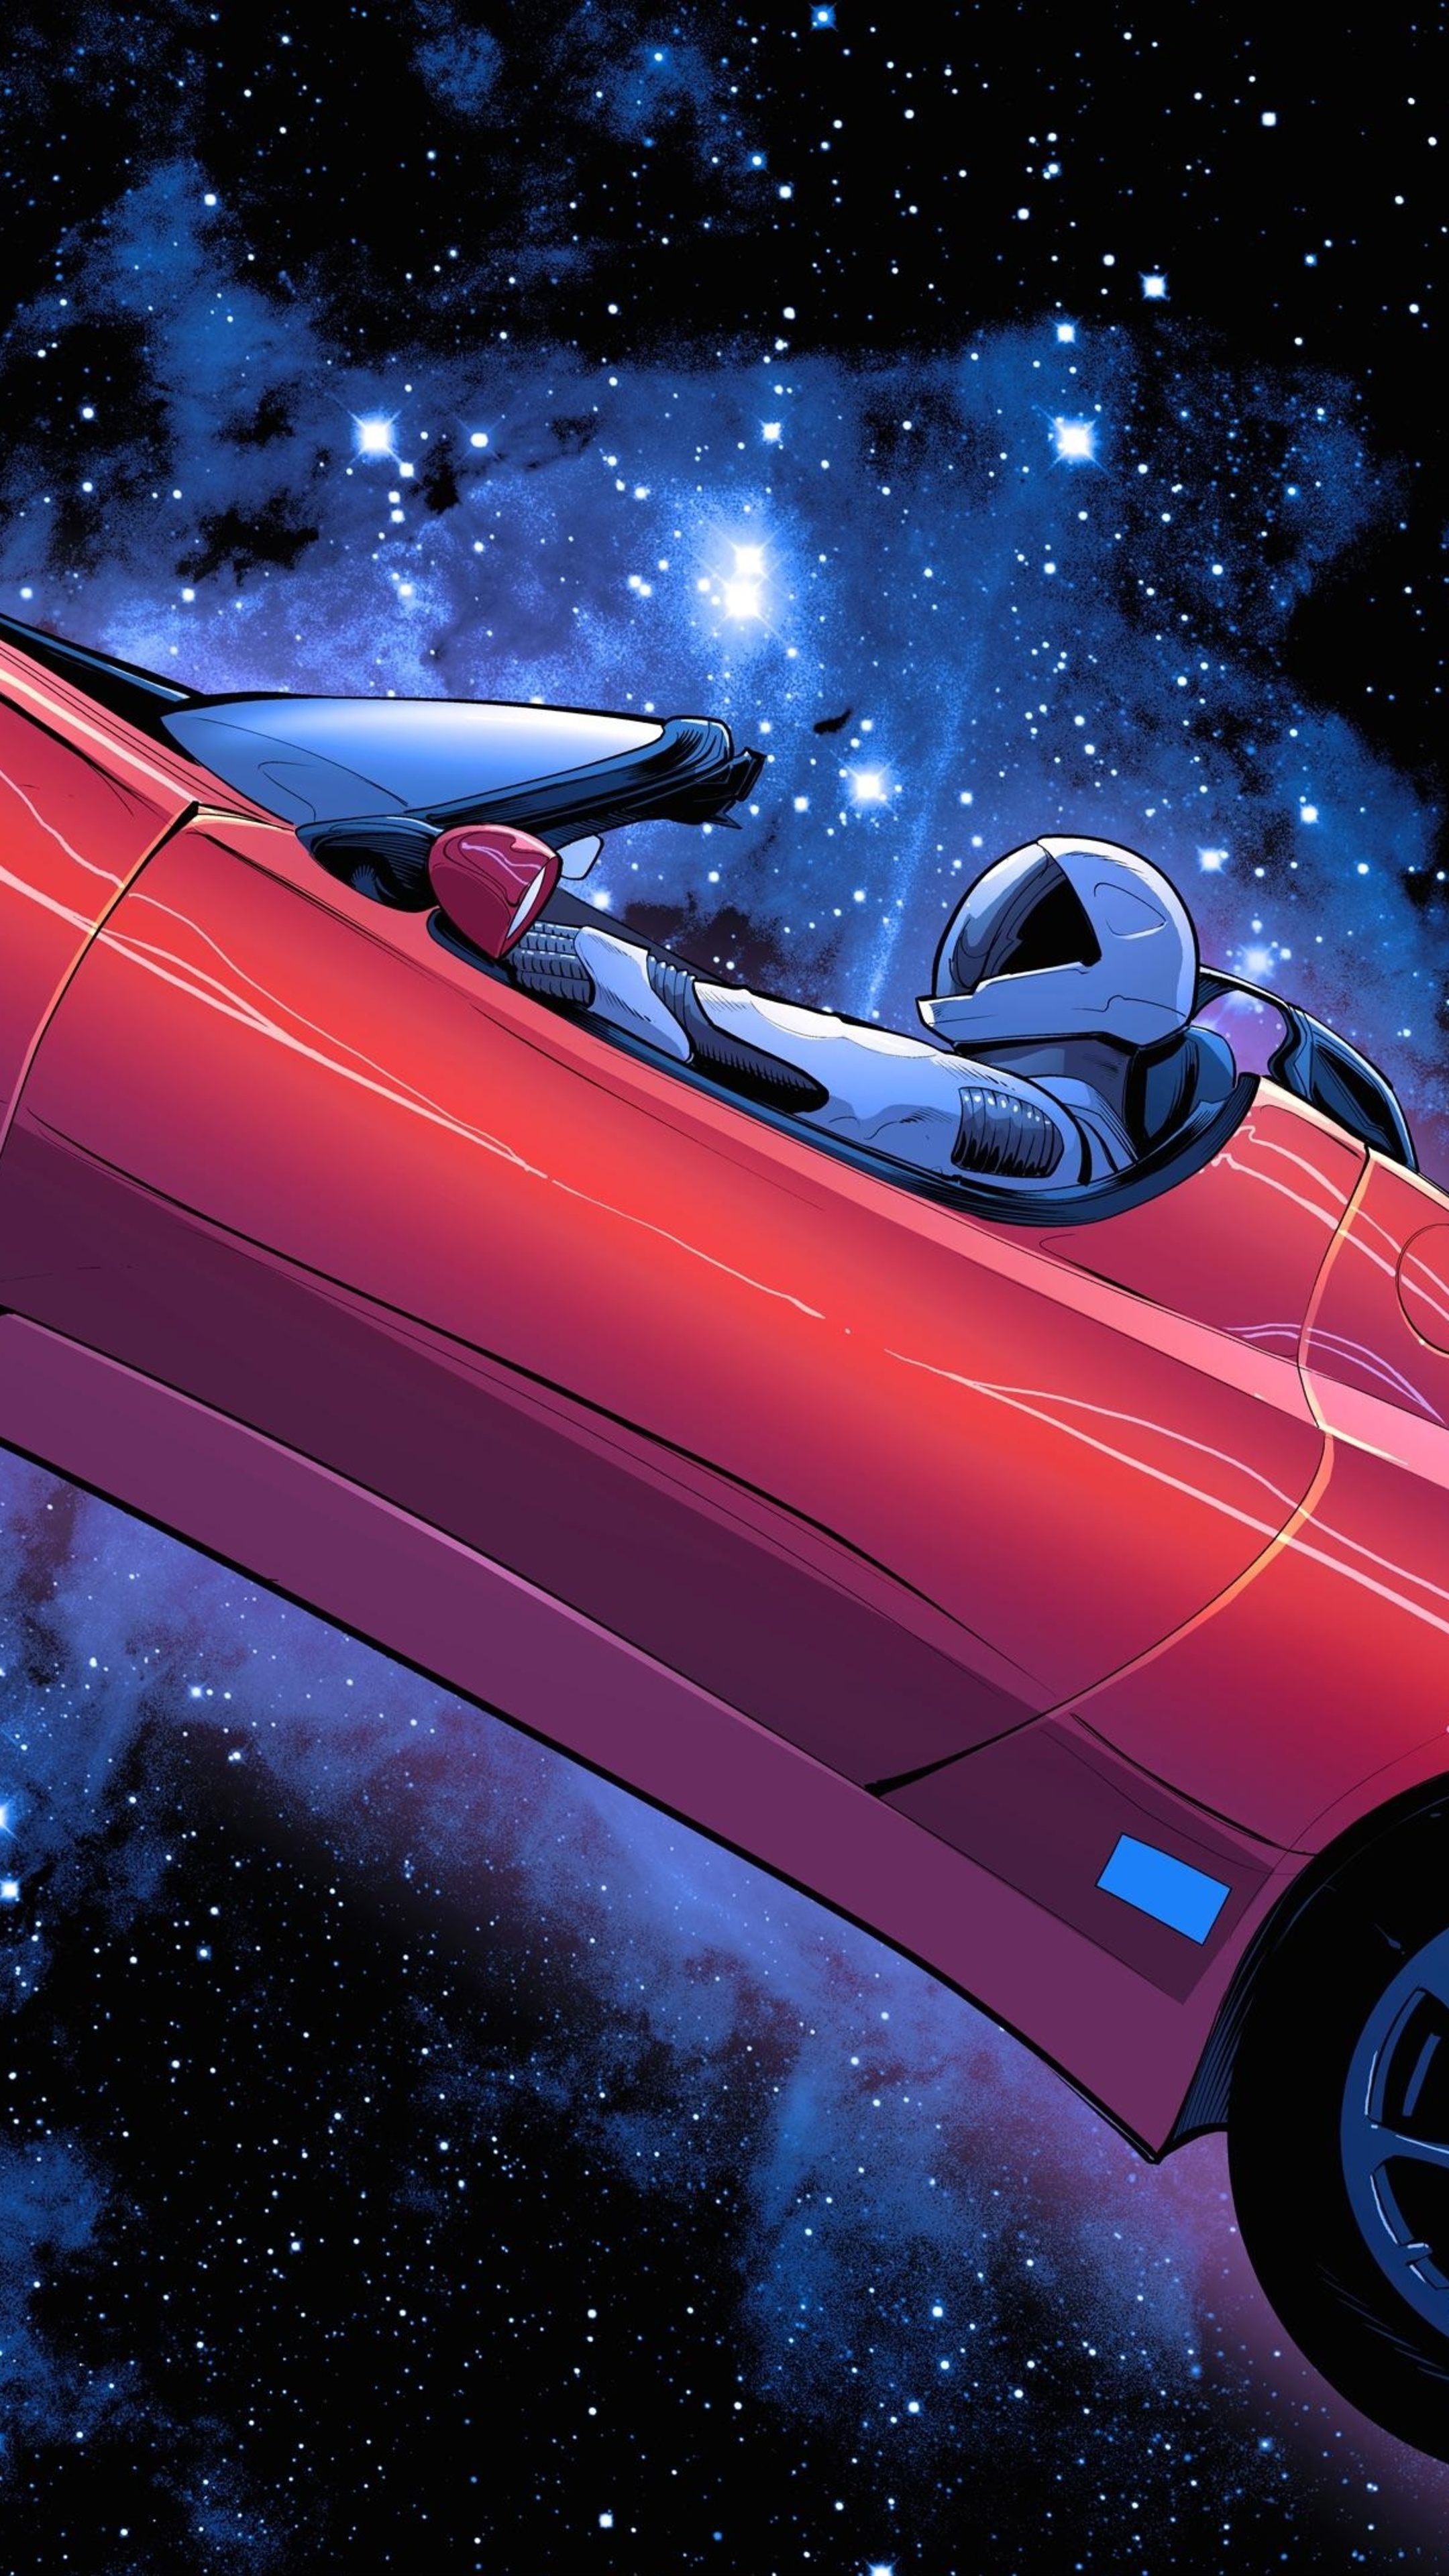 Starman waiting in the. Тесла родстер стармэн. Tesla Roadster 1998. Tesla Roadster 1999.